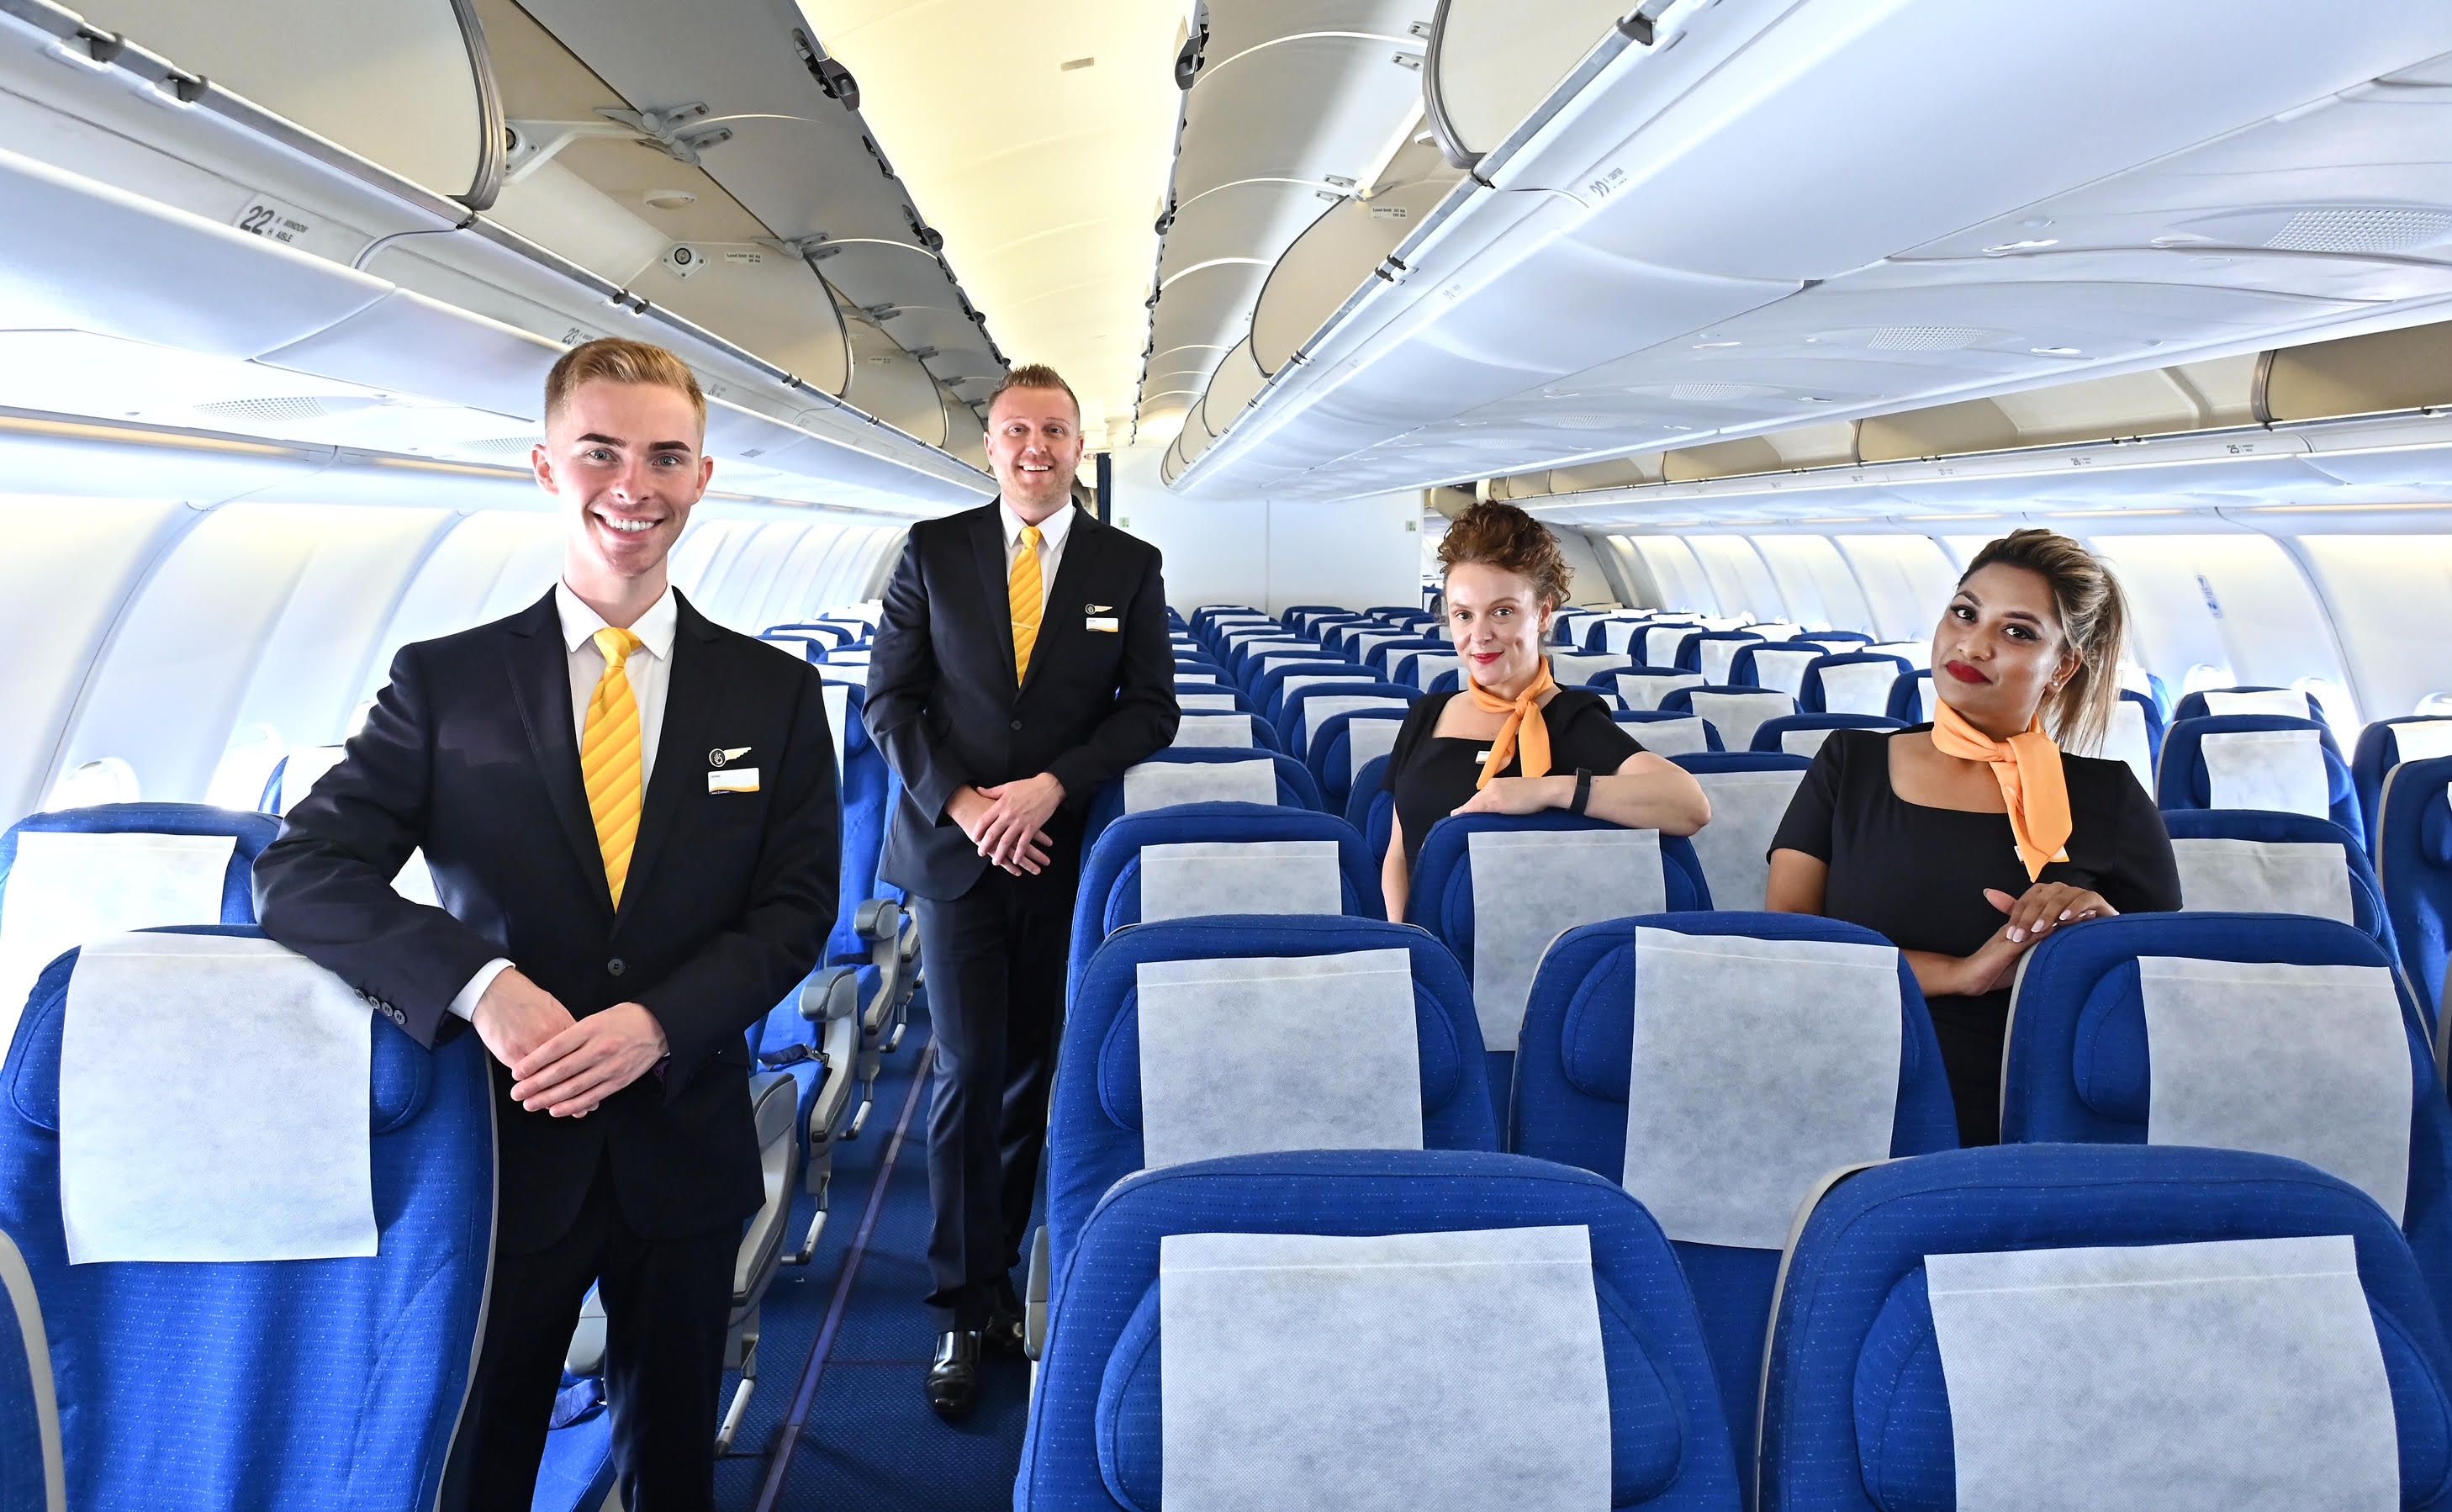 Hans Airways cabin crew recruitment